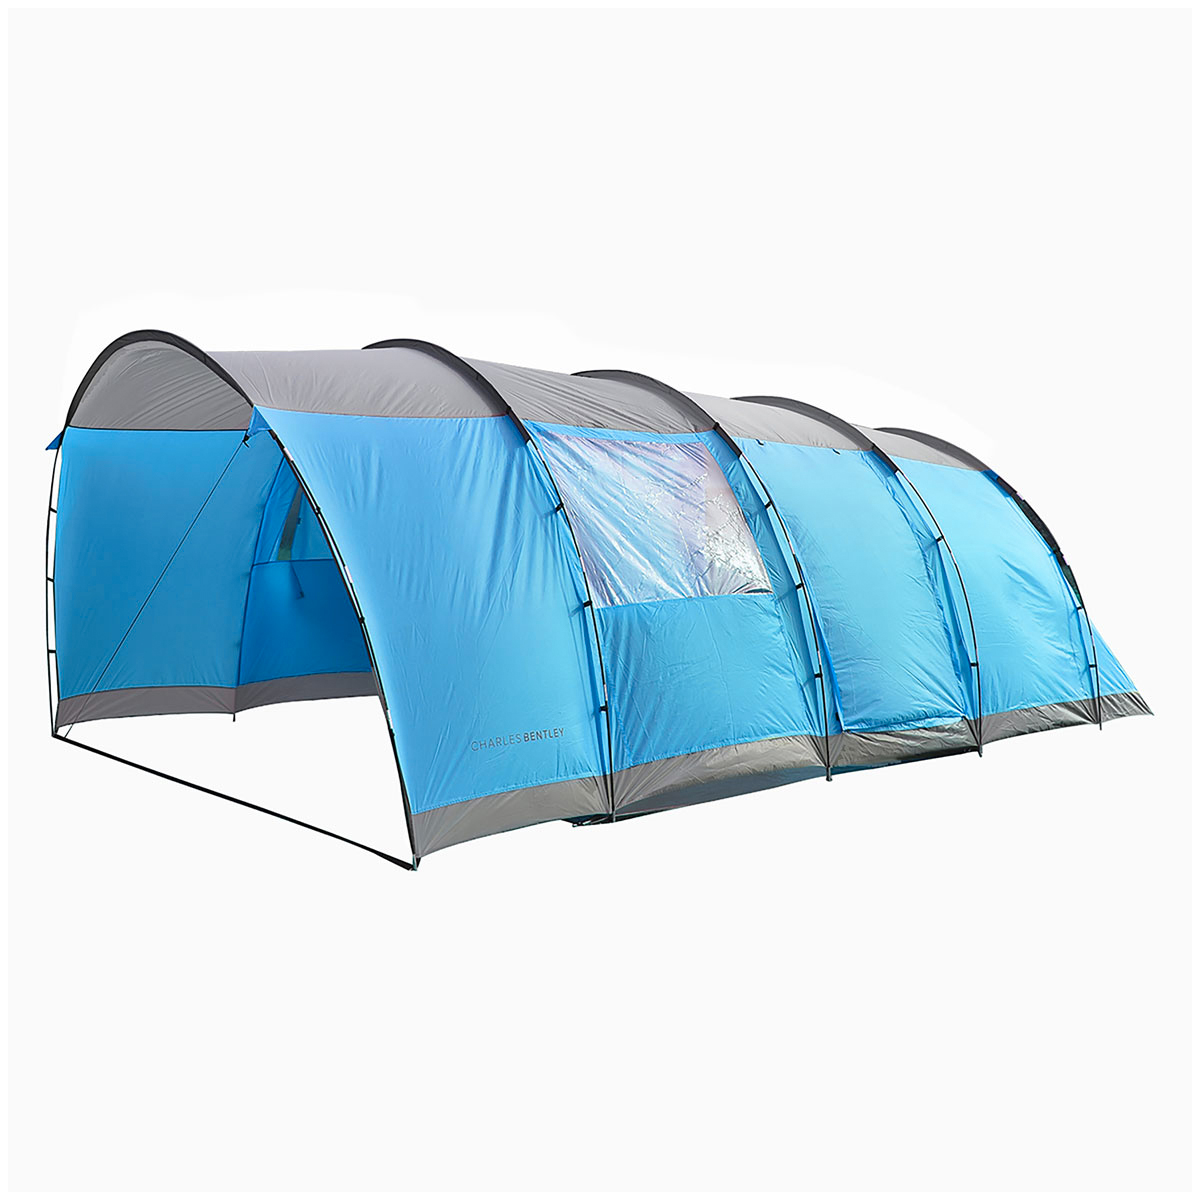 Gelert Horizon 4 Black Coded Replacement Fibreglass Tent Pole Run Upto 2015